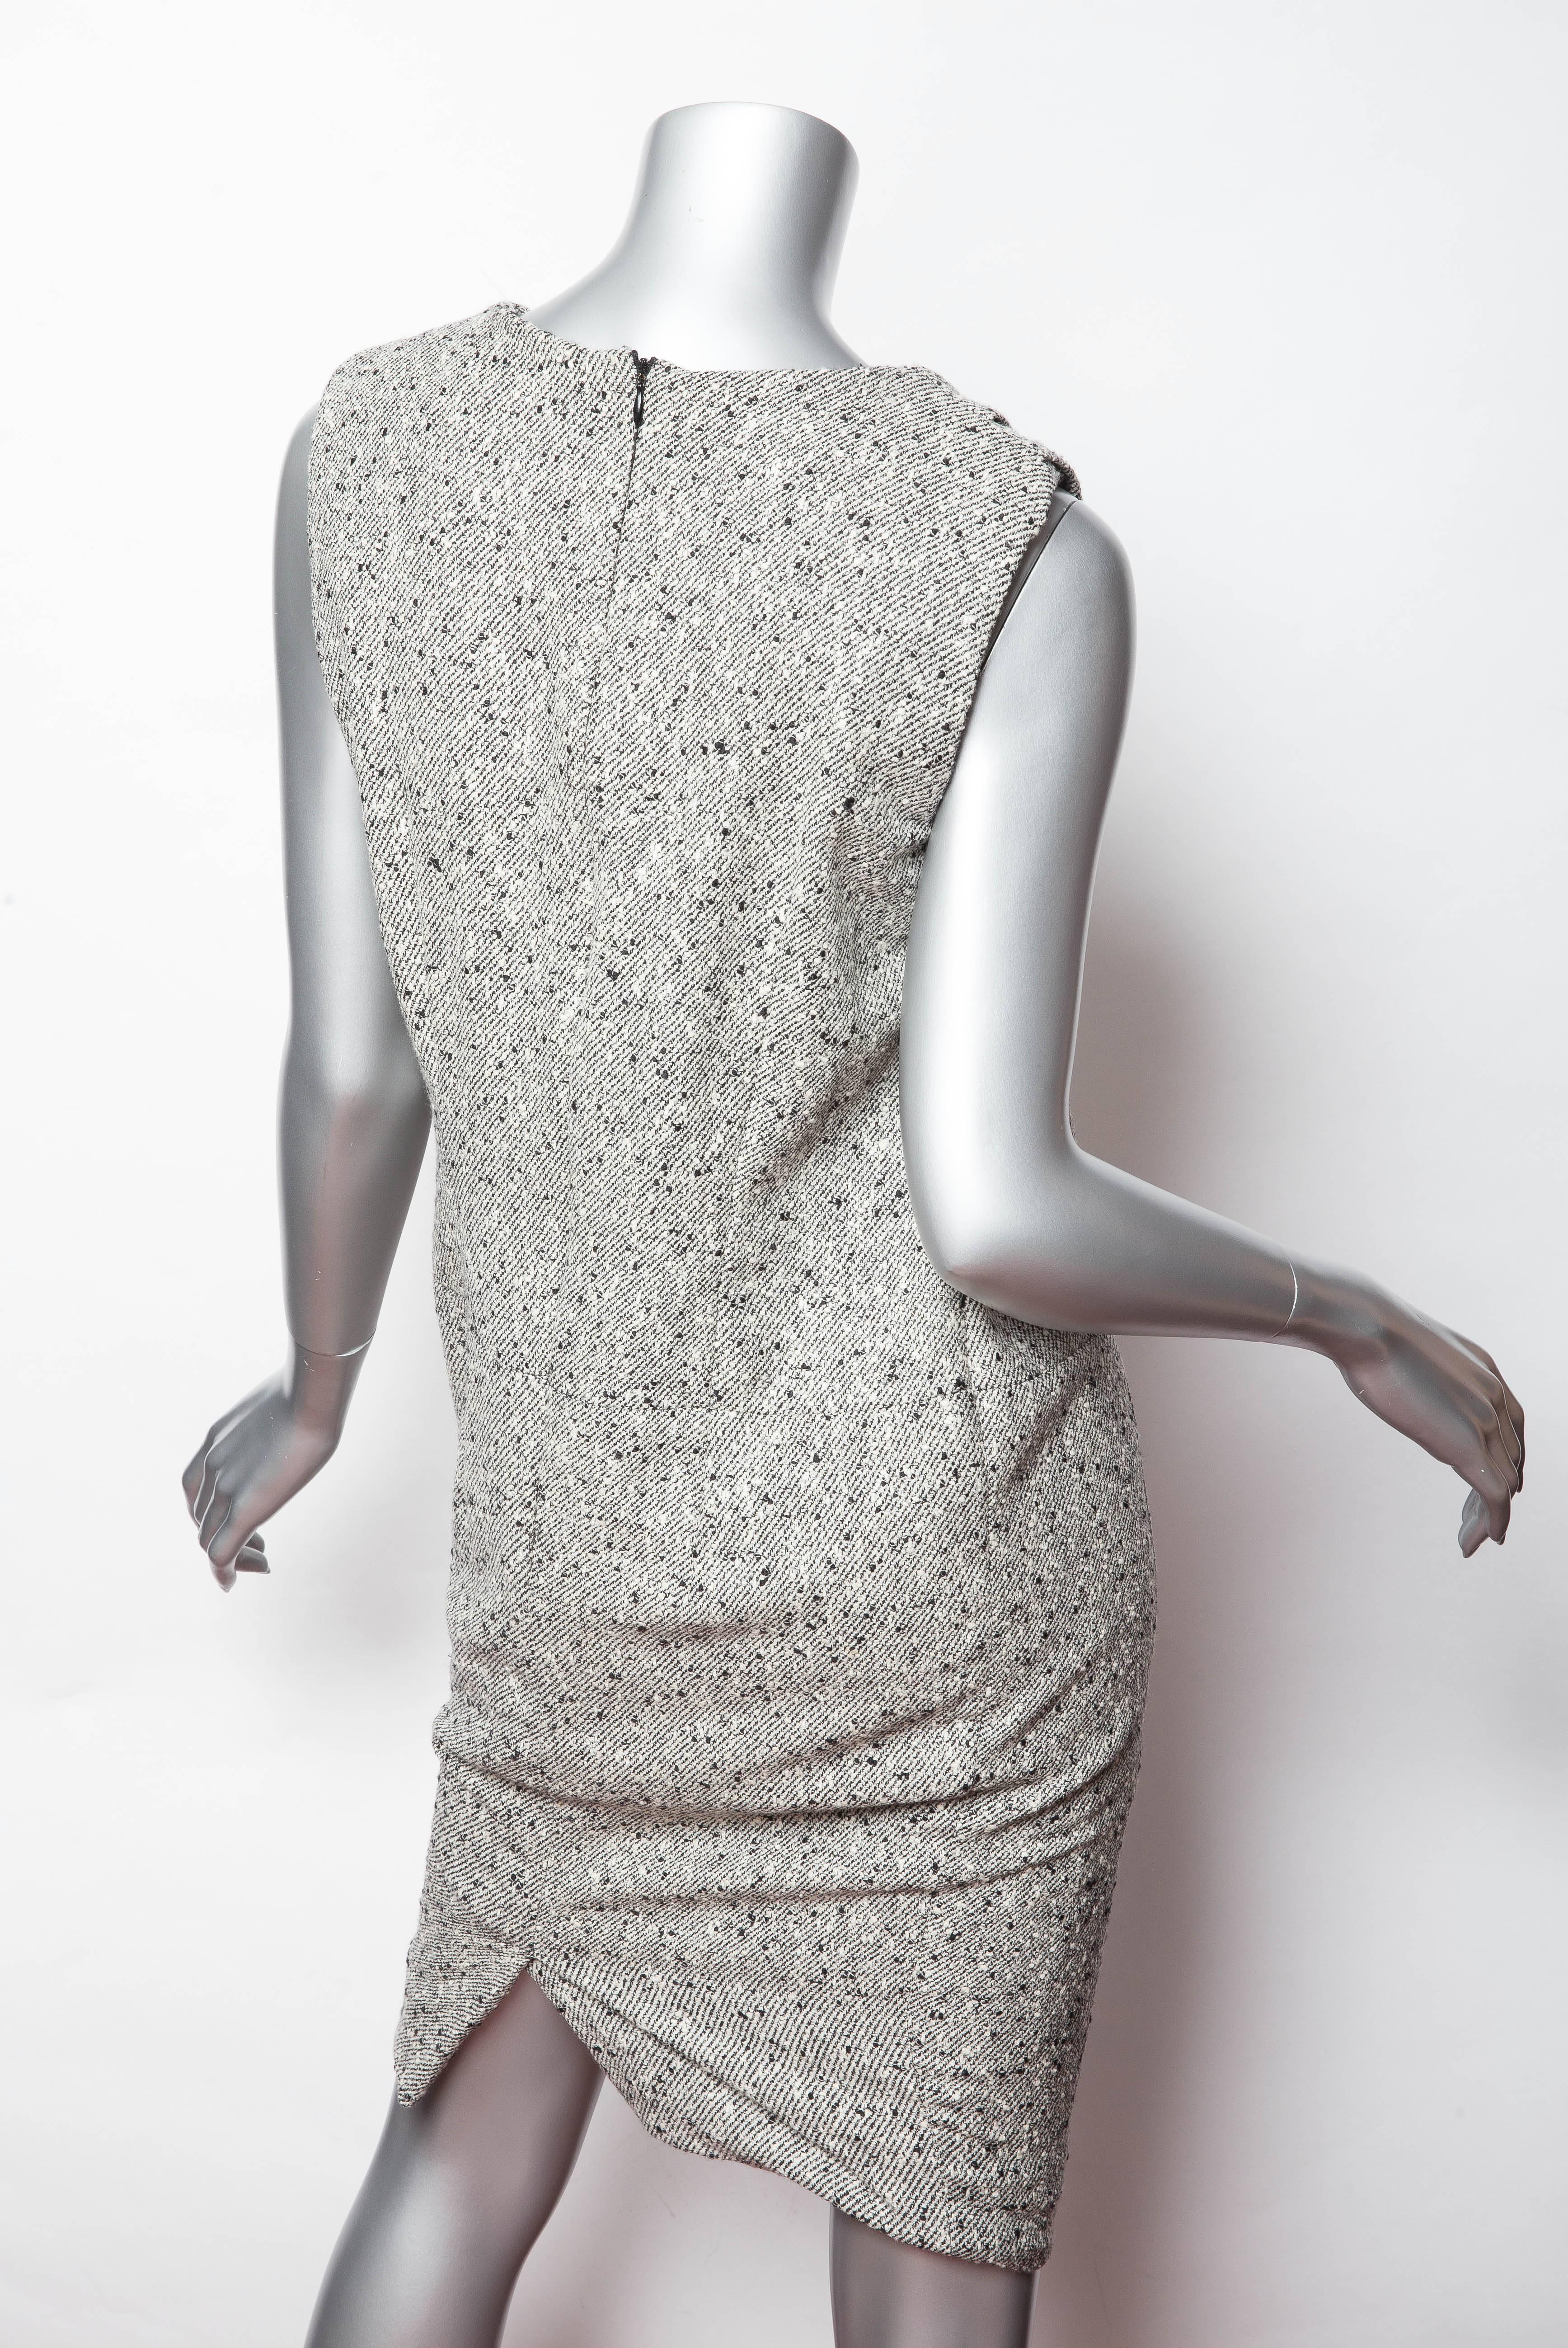 Very chic Carolina Herrera Sleeveless Wool Dress in Black and Cream Boucle with a back zip. 